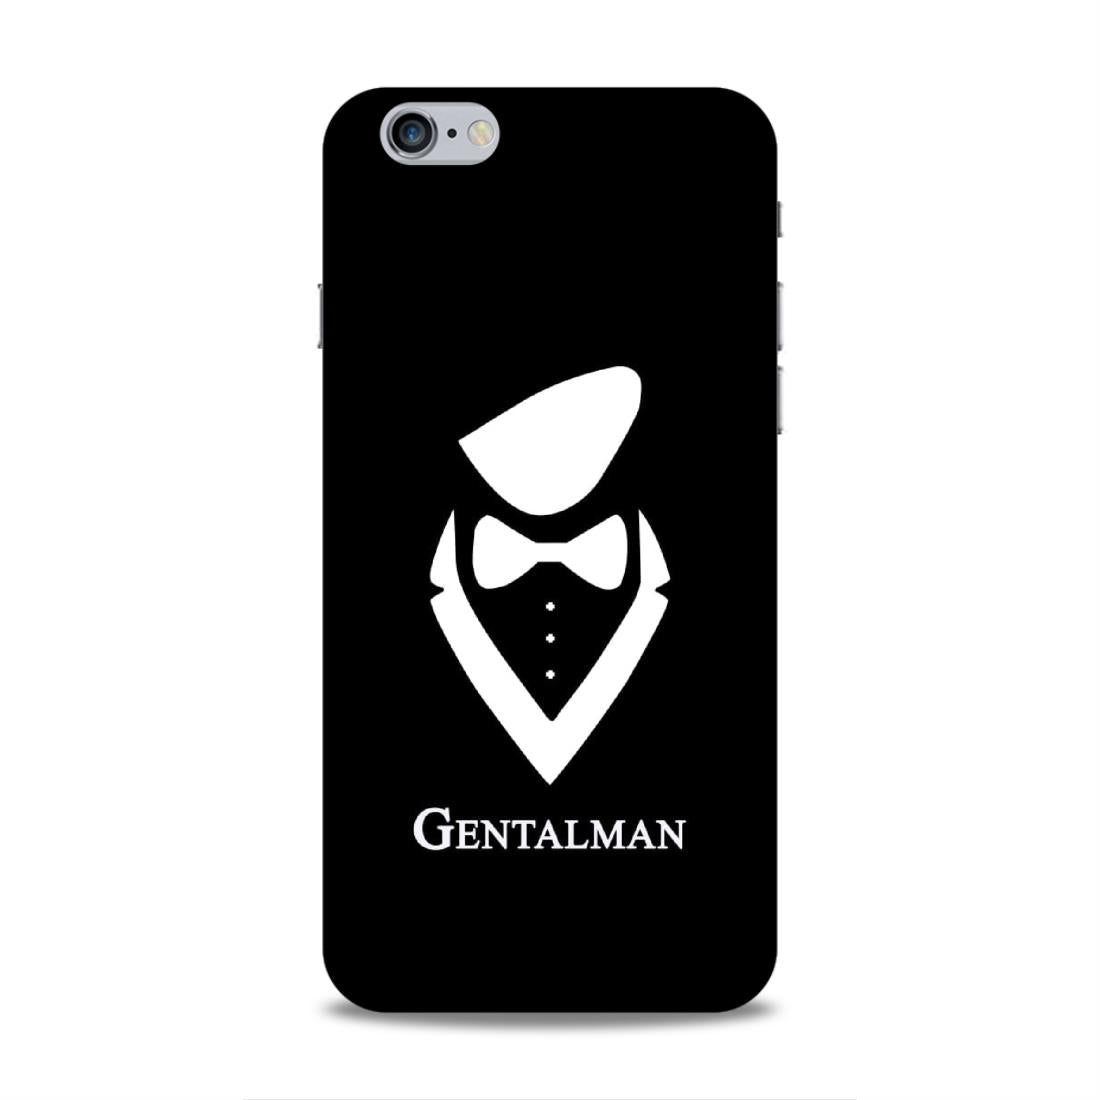 Gentalman Hard Back Case For Apple iPhone 6 Plus / 6s Plus